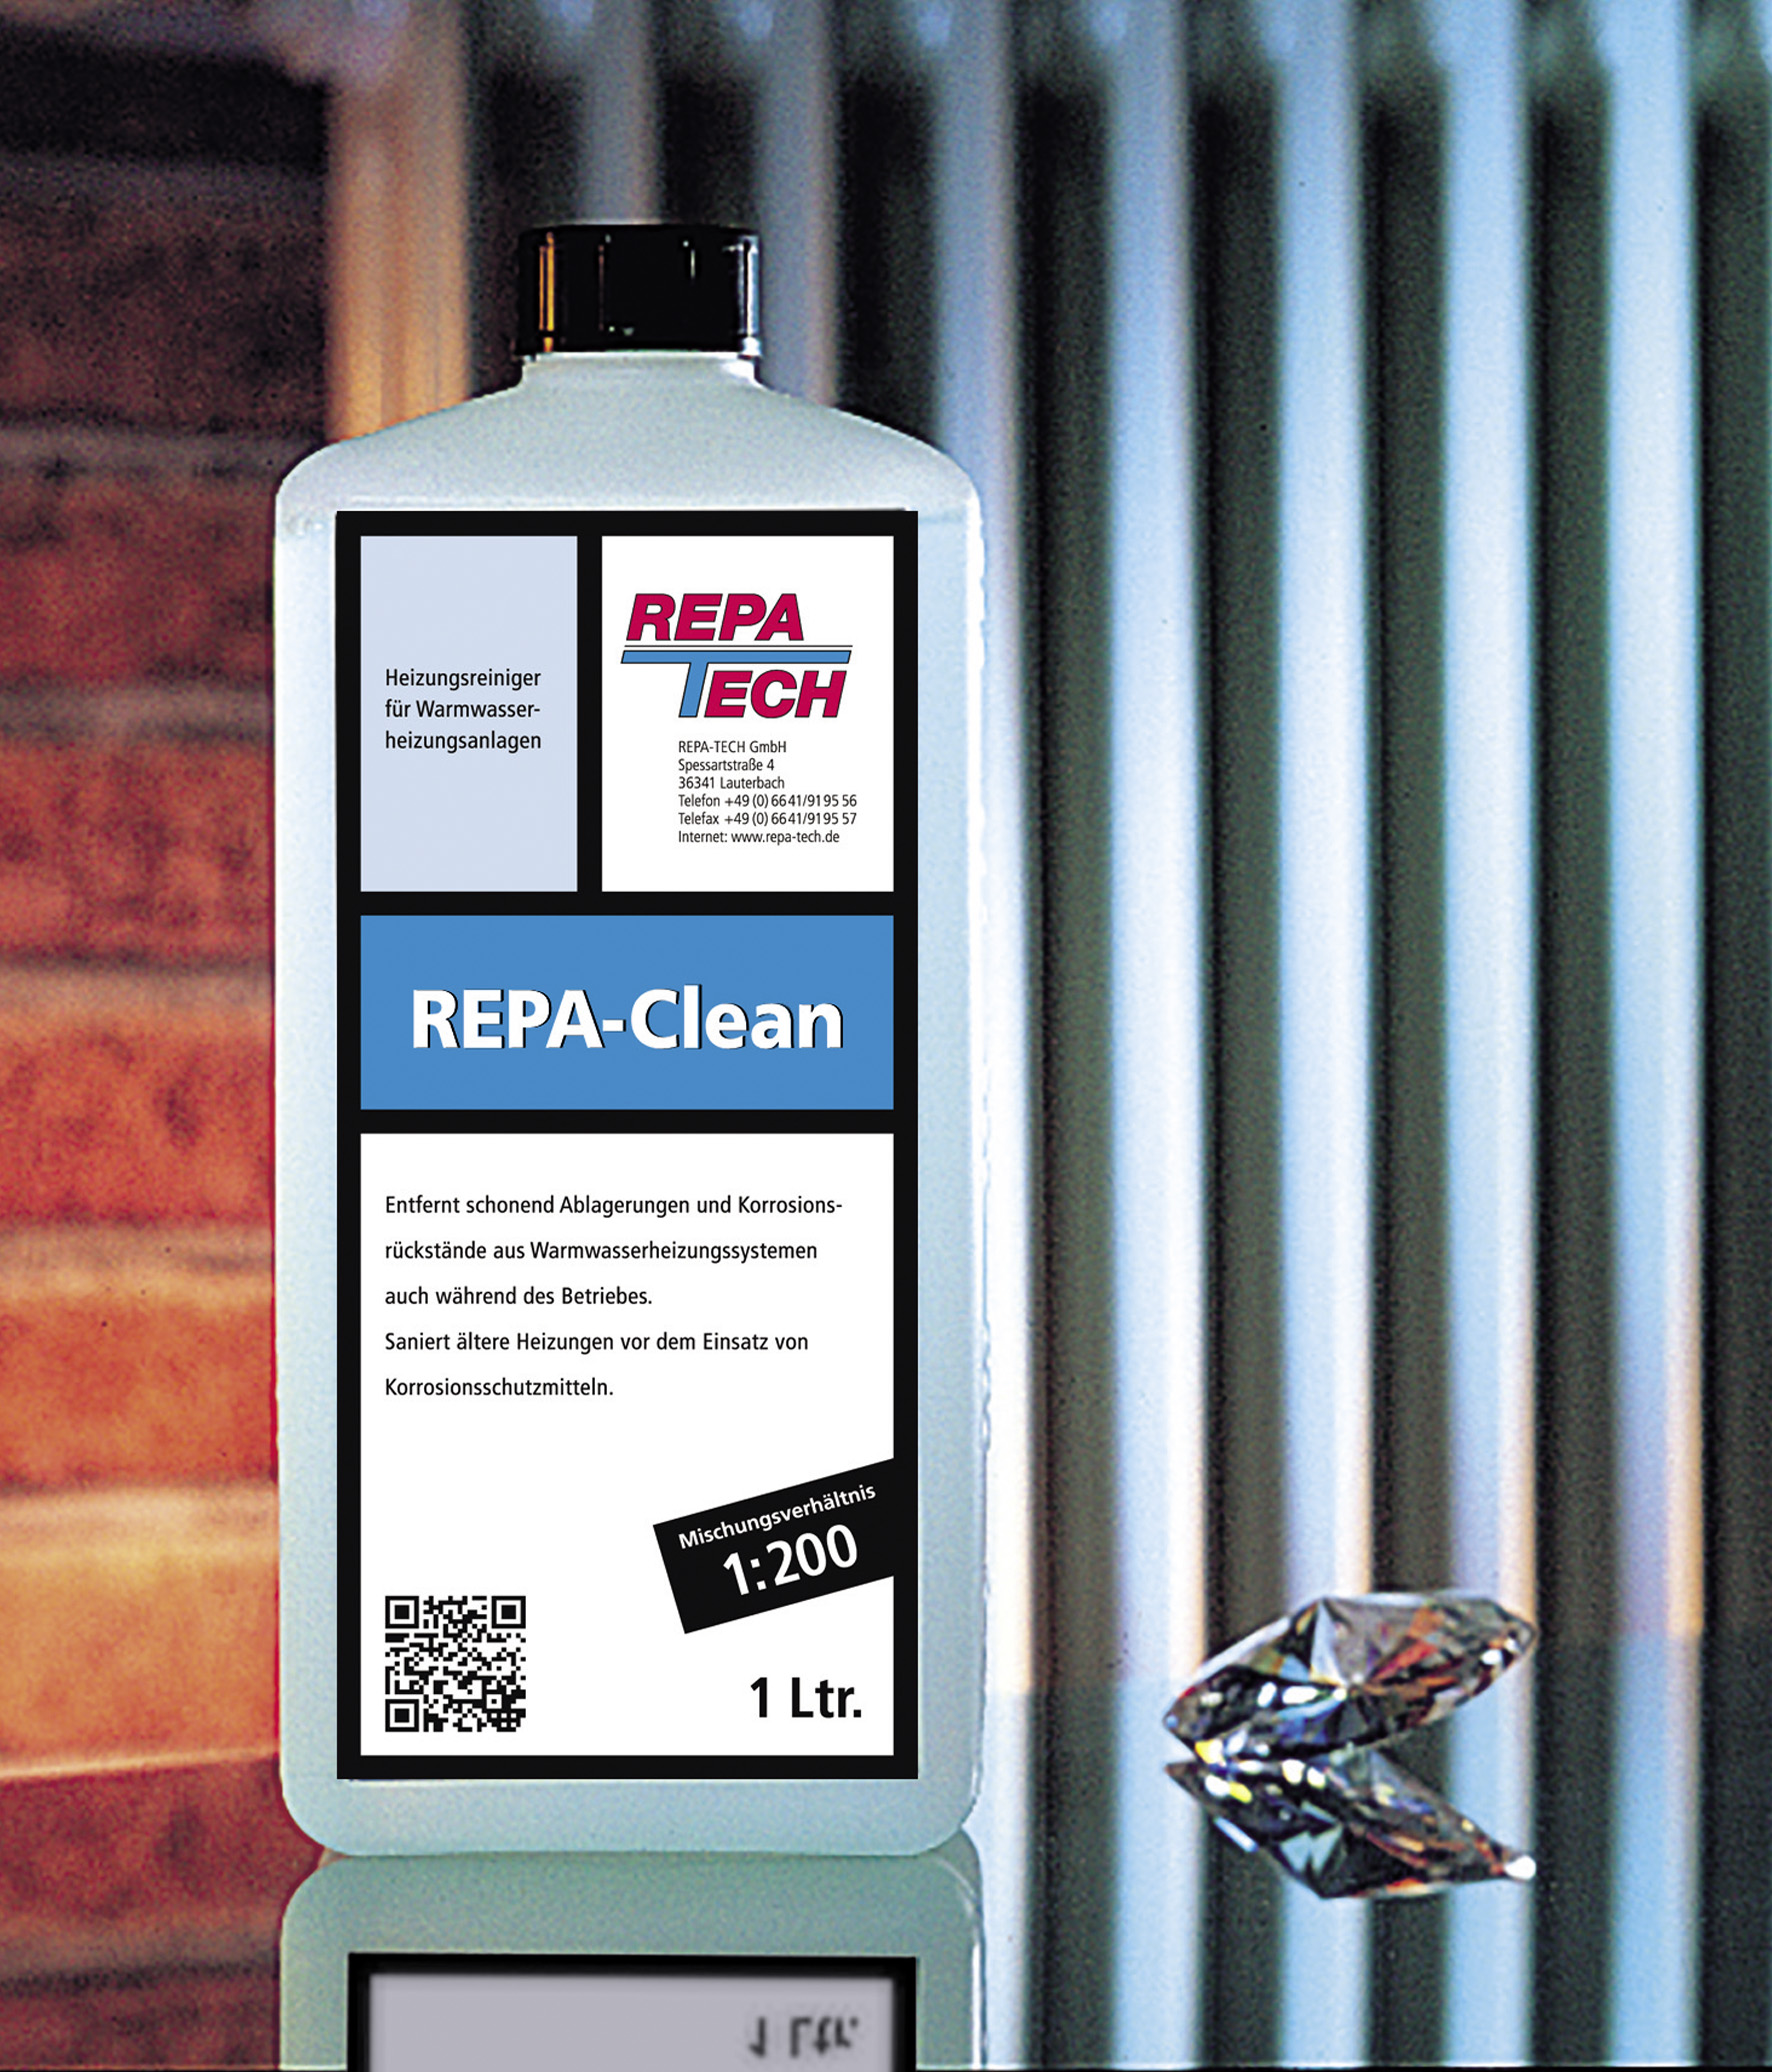 REPA-Clean - REPA-TECH